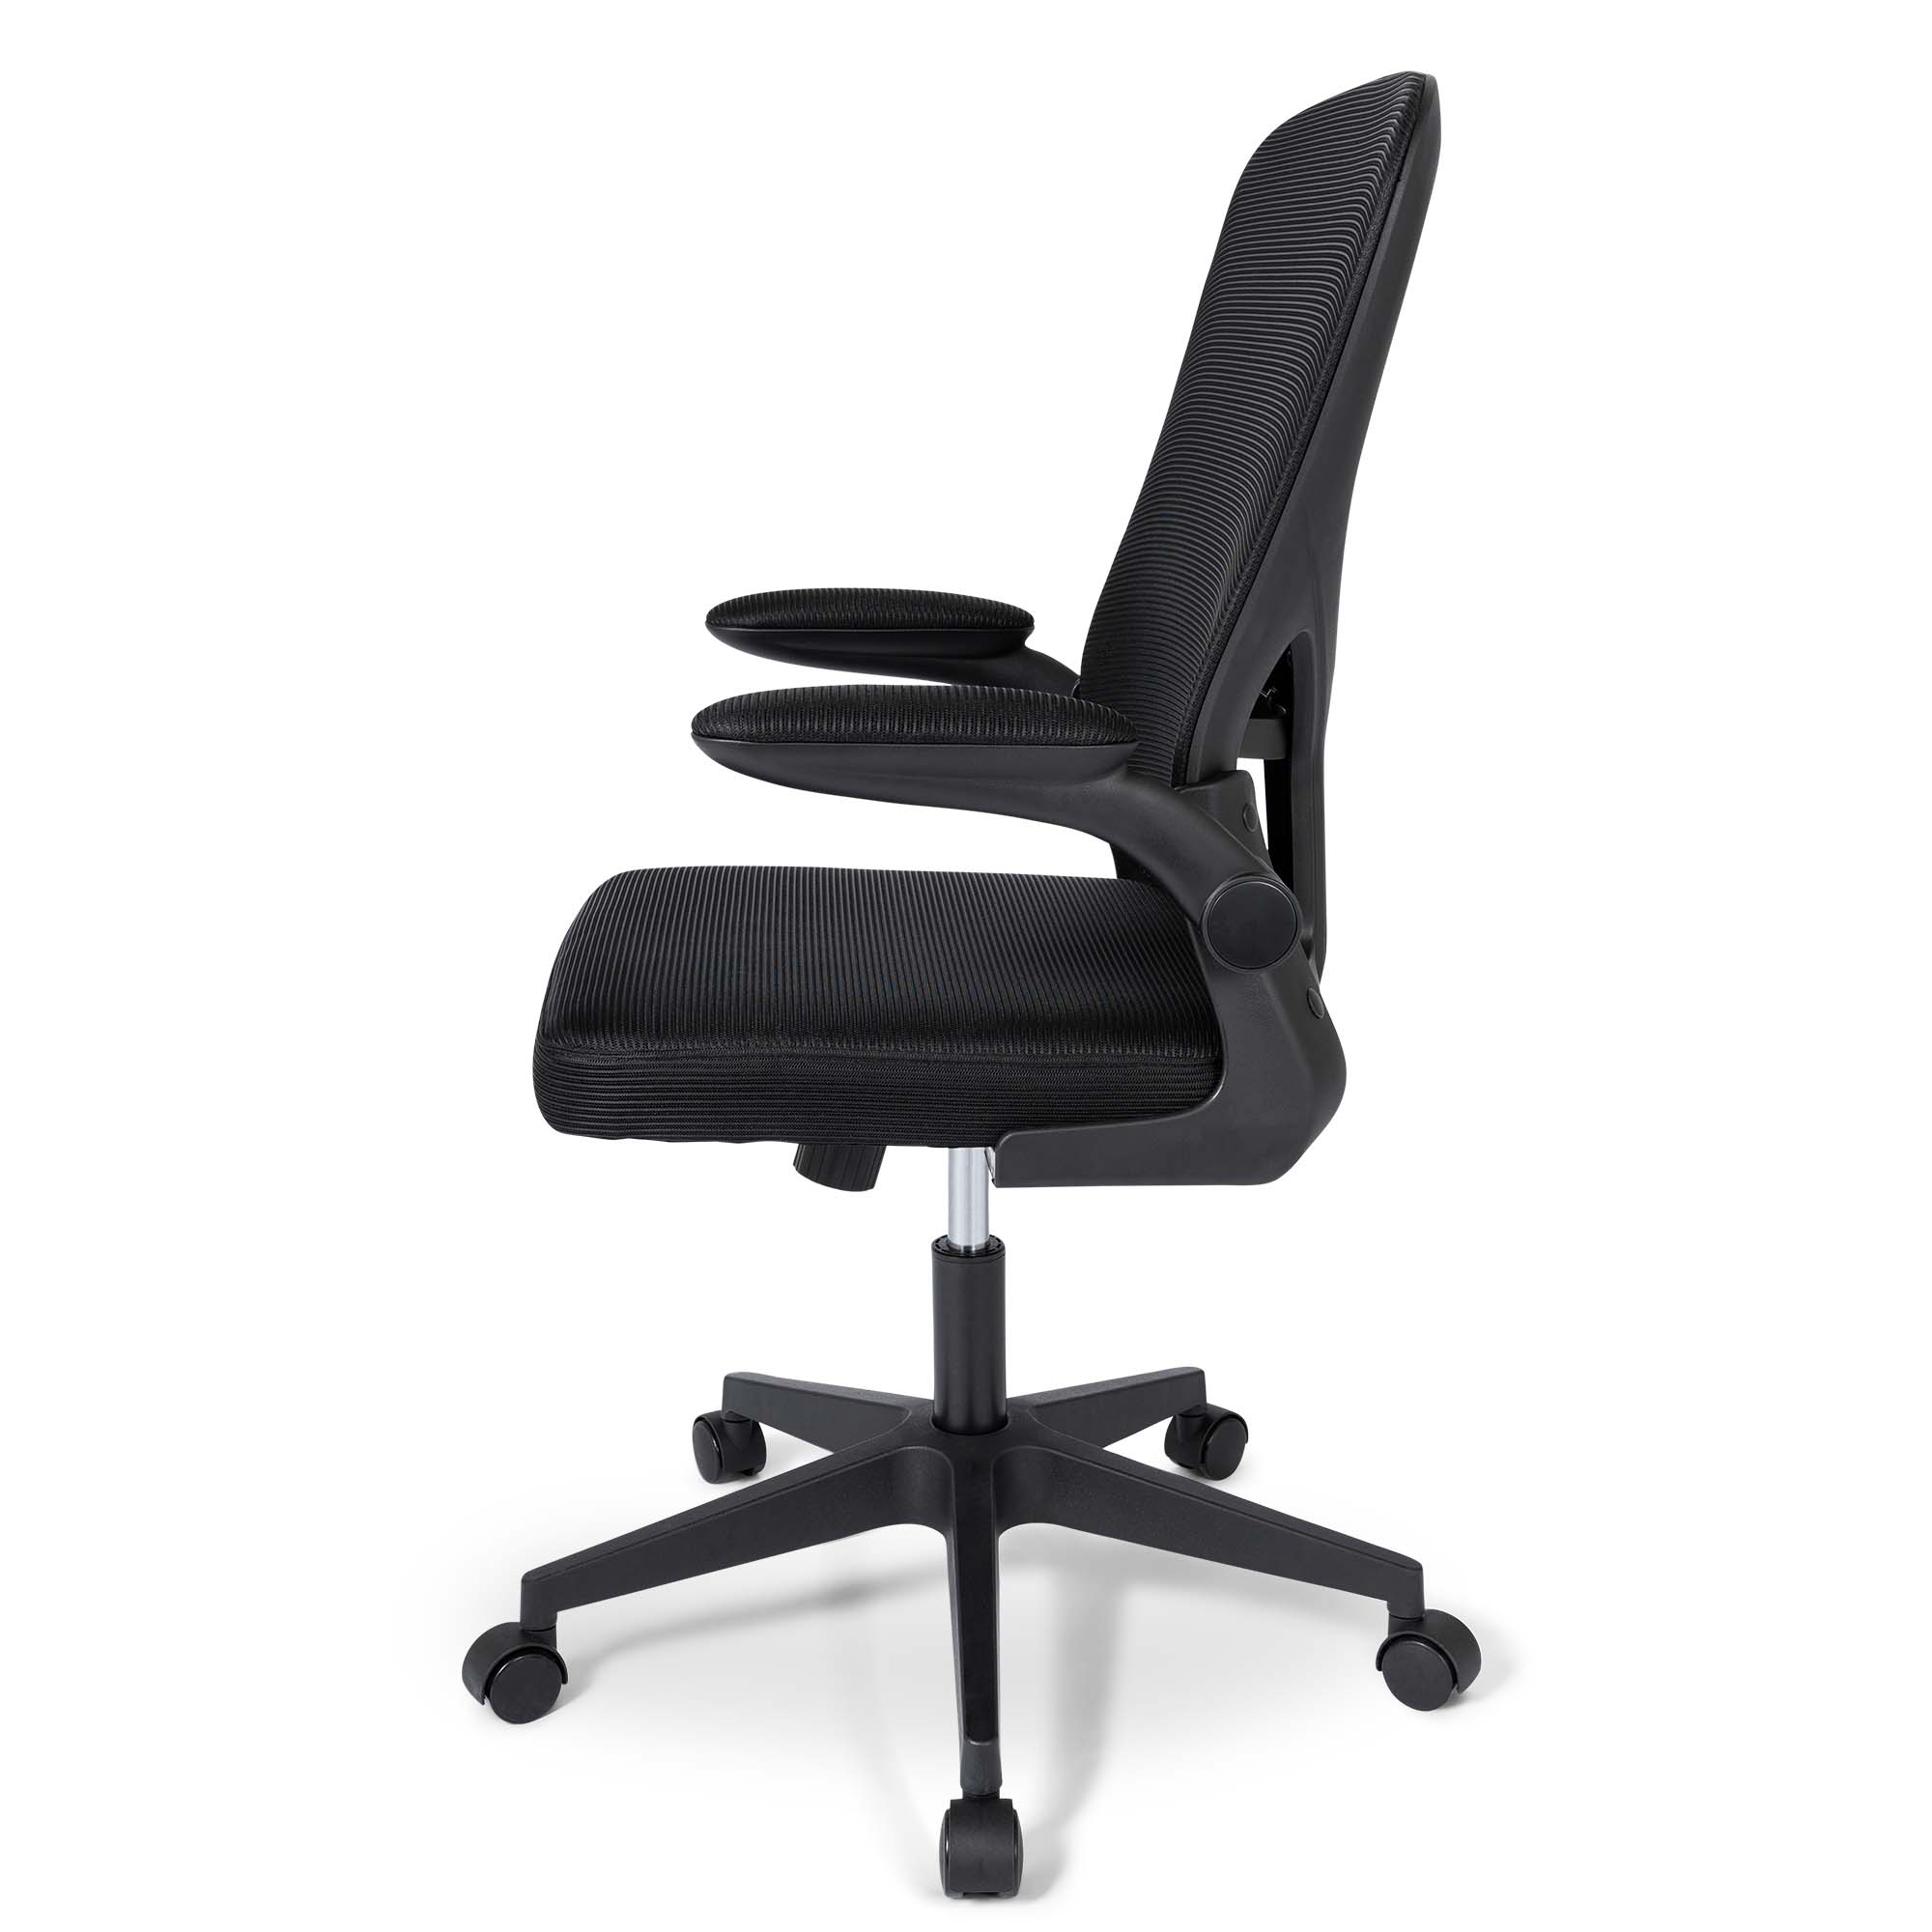 Ergodu Ergonomic Office Chair with Foldable Armrests side